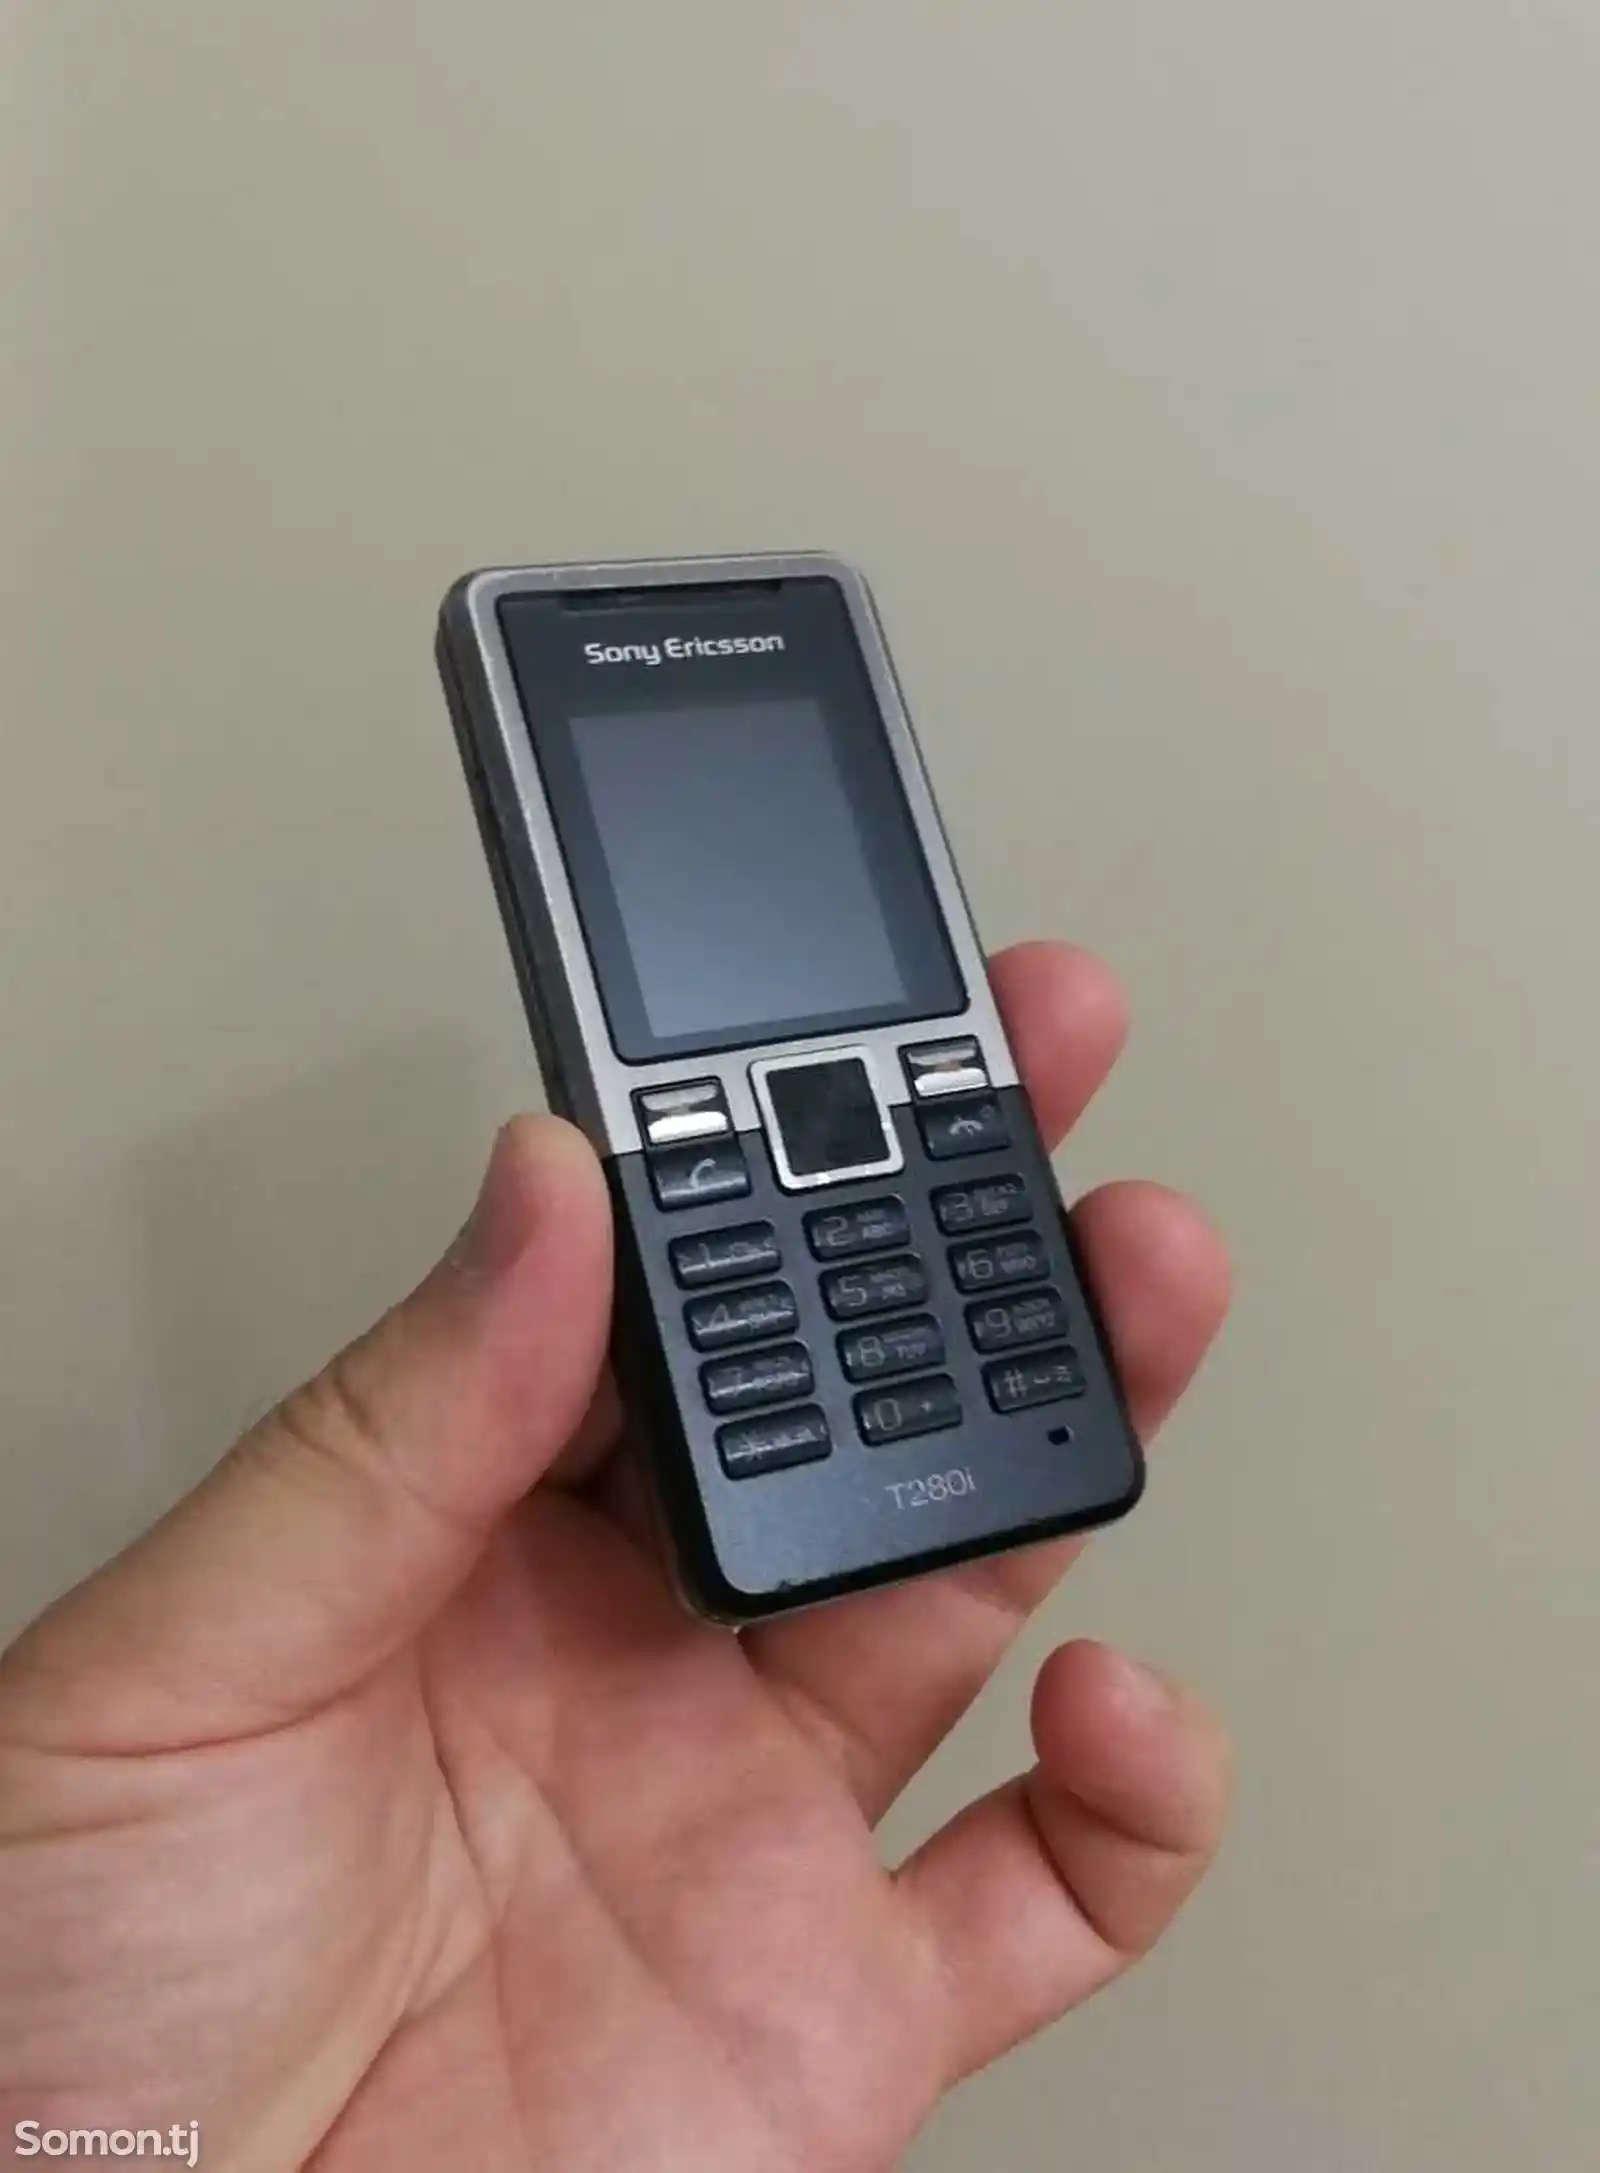 Sony Ericsson T280i-1